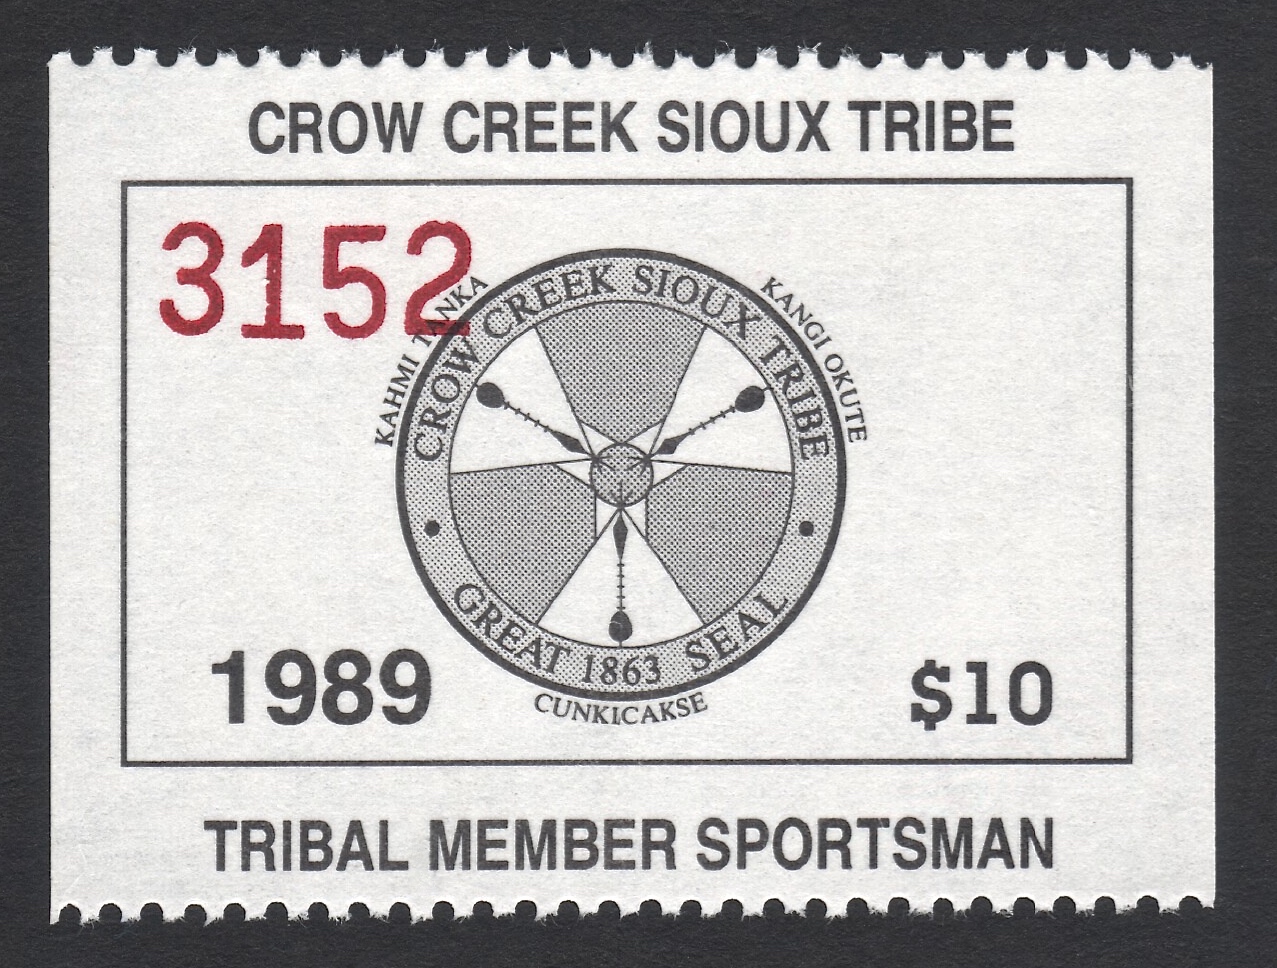 1989 Crow Creek Tribal Member Sportsman